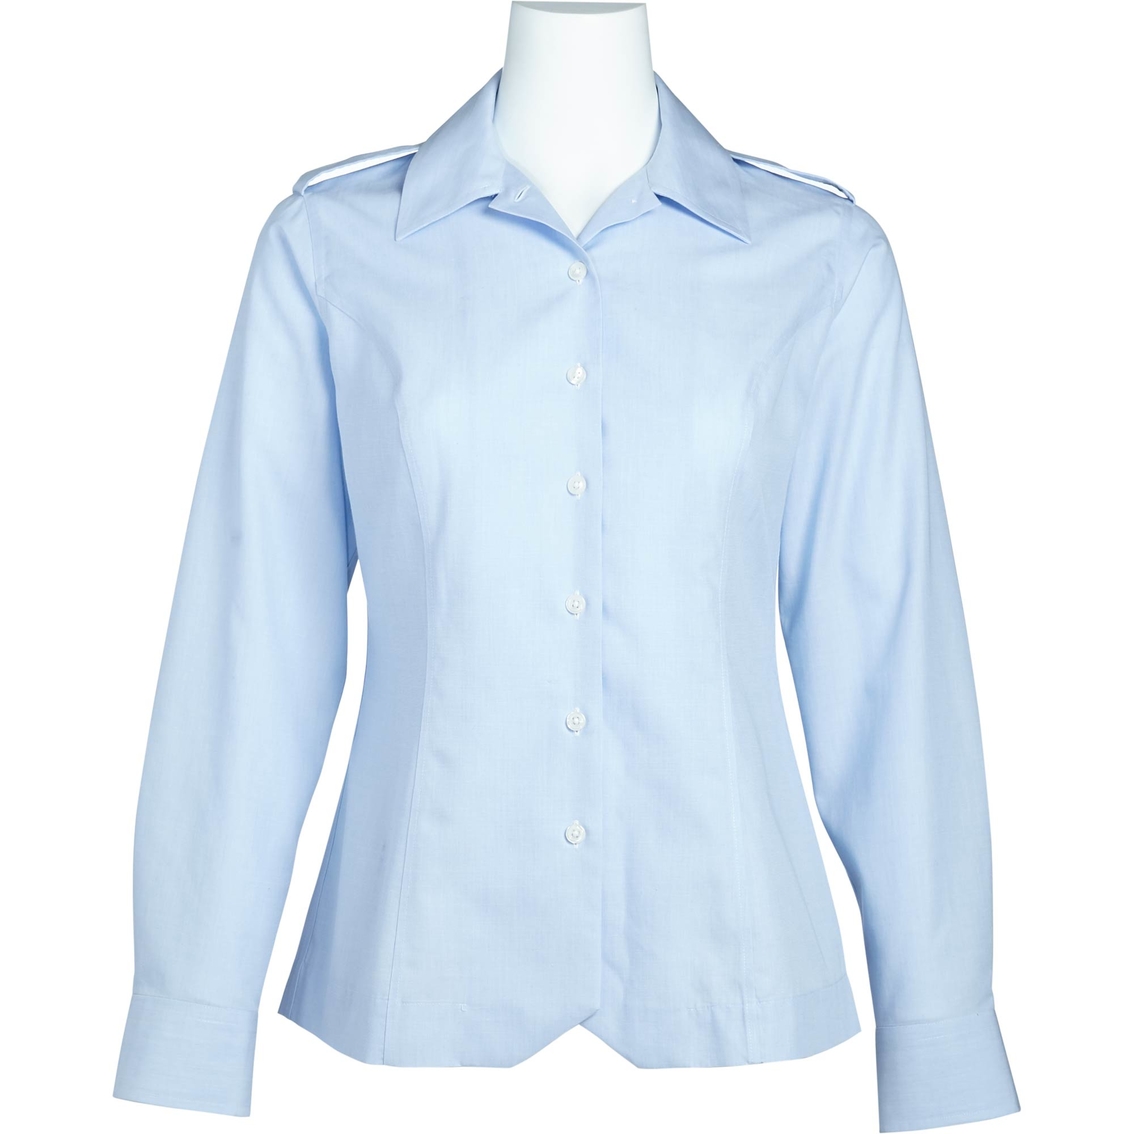 Brooks Brothers Female Premier Air Force Uniform Shirt - Image 2 of 4